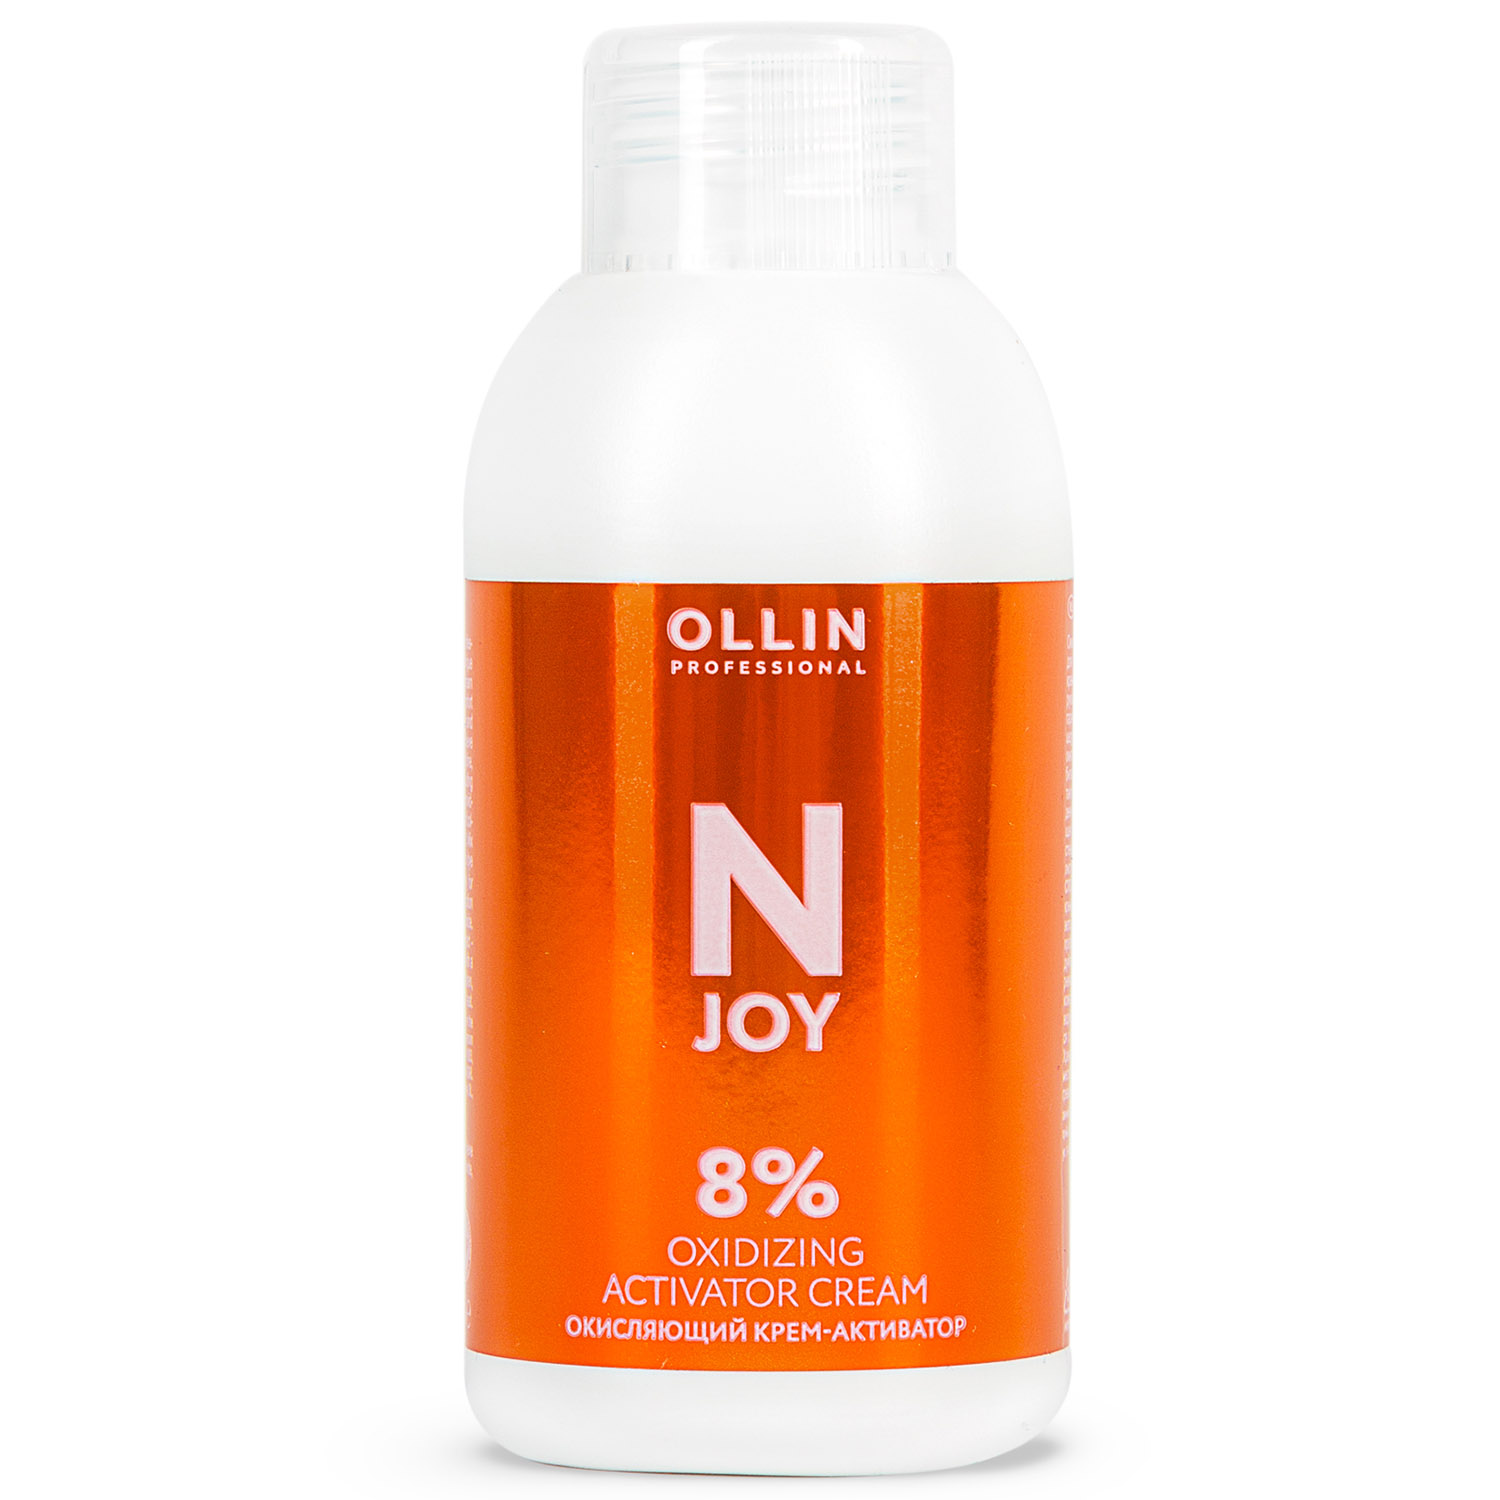 Ollin Professional Окисляющий крем-активатор 8%, 100 мл (Ollin Professional, N-Joy)